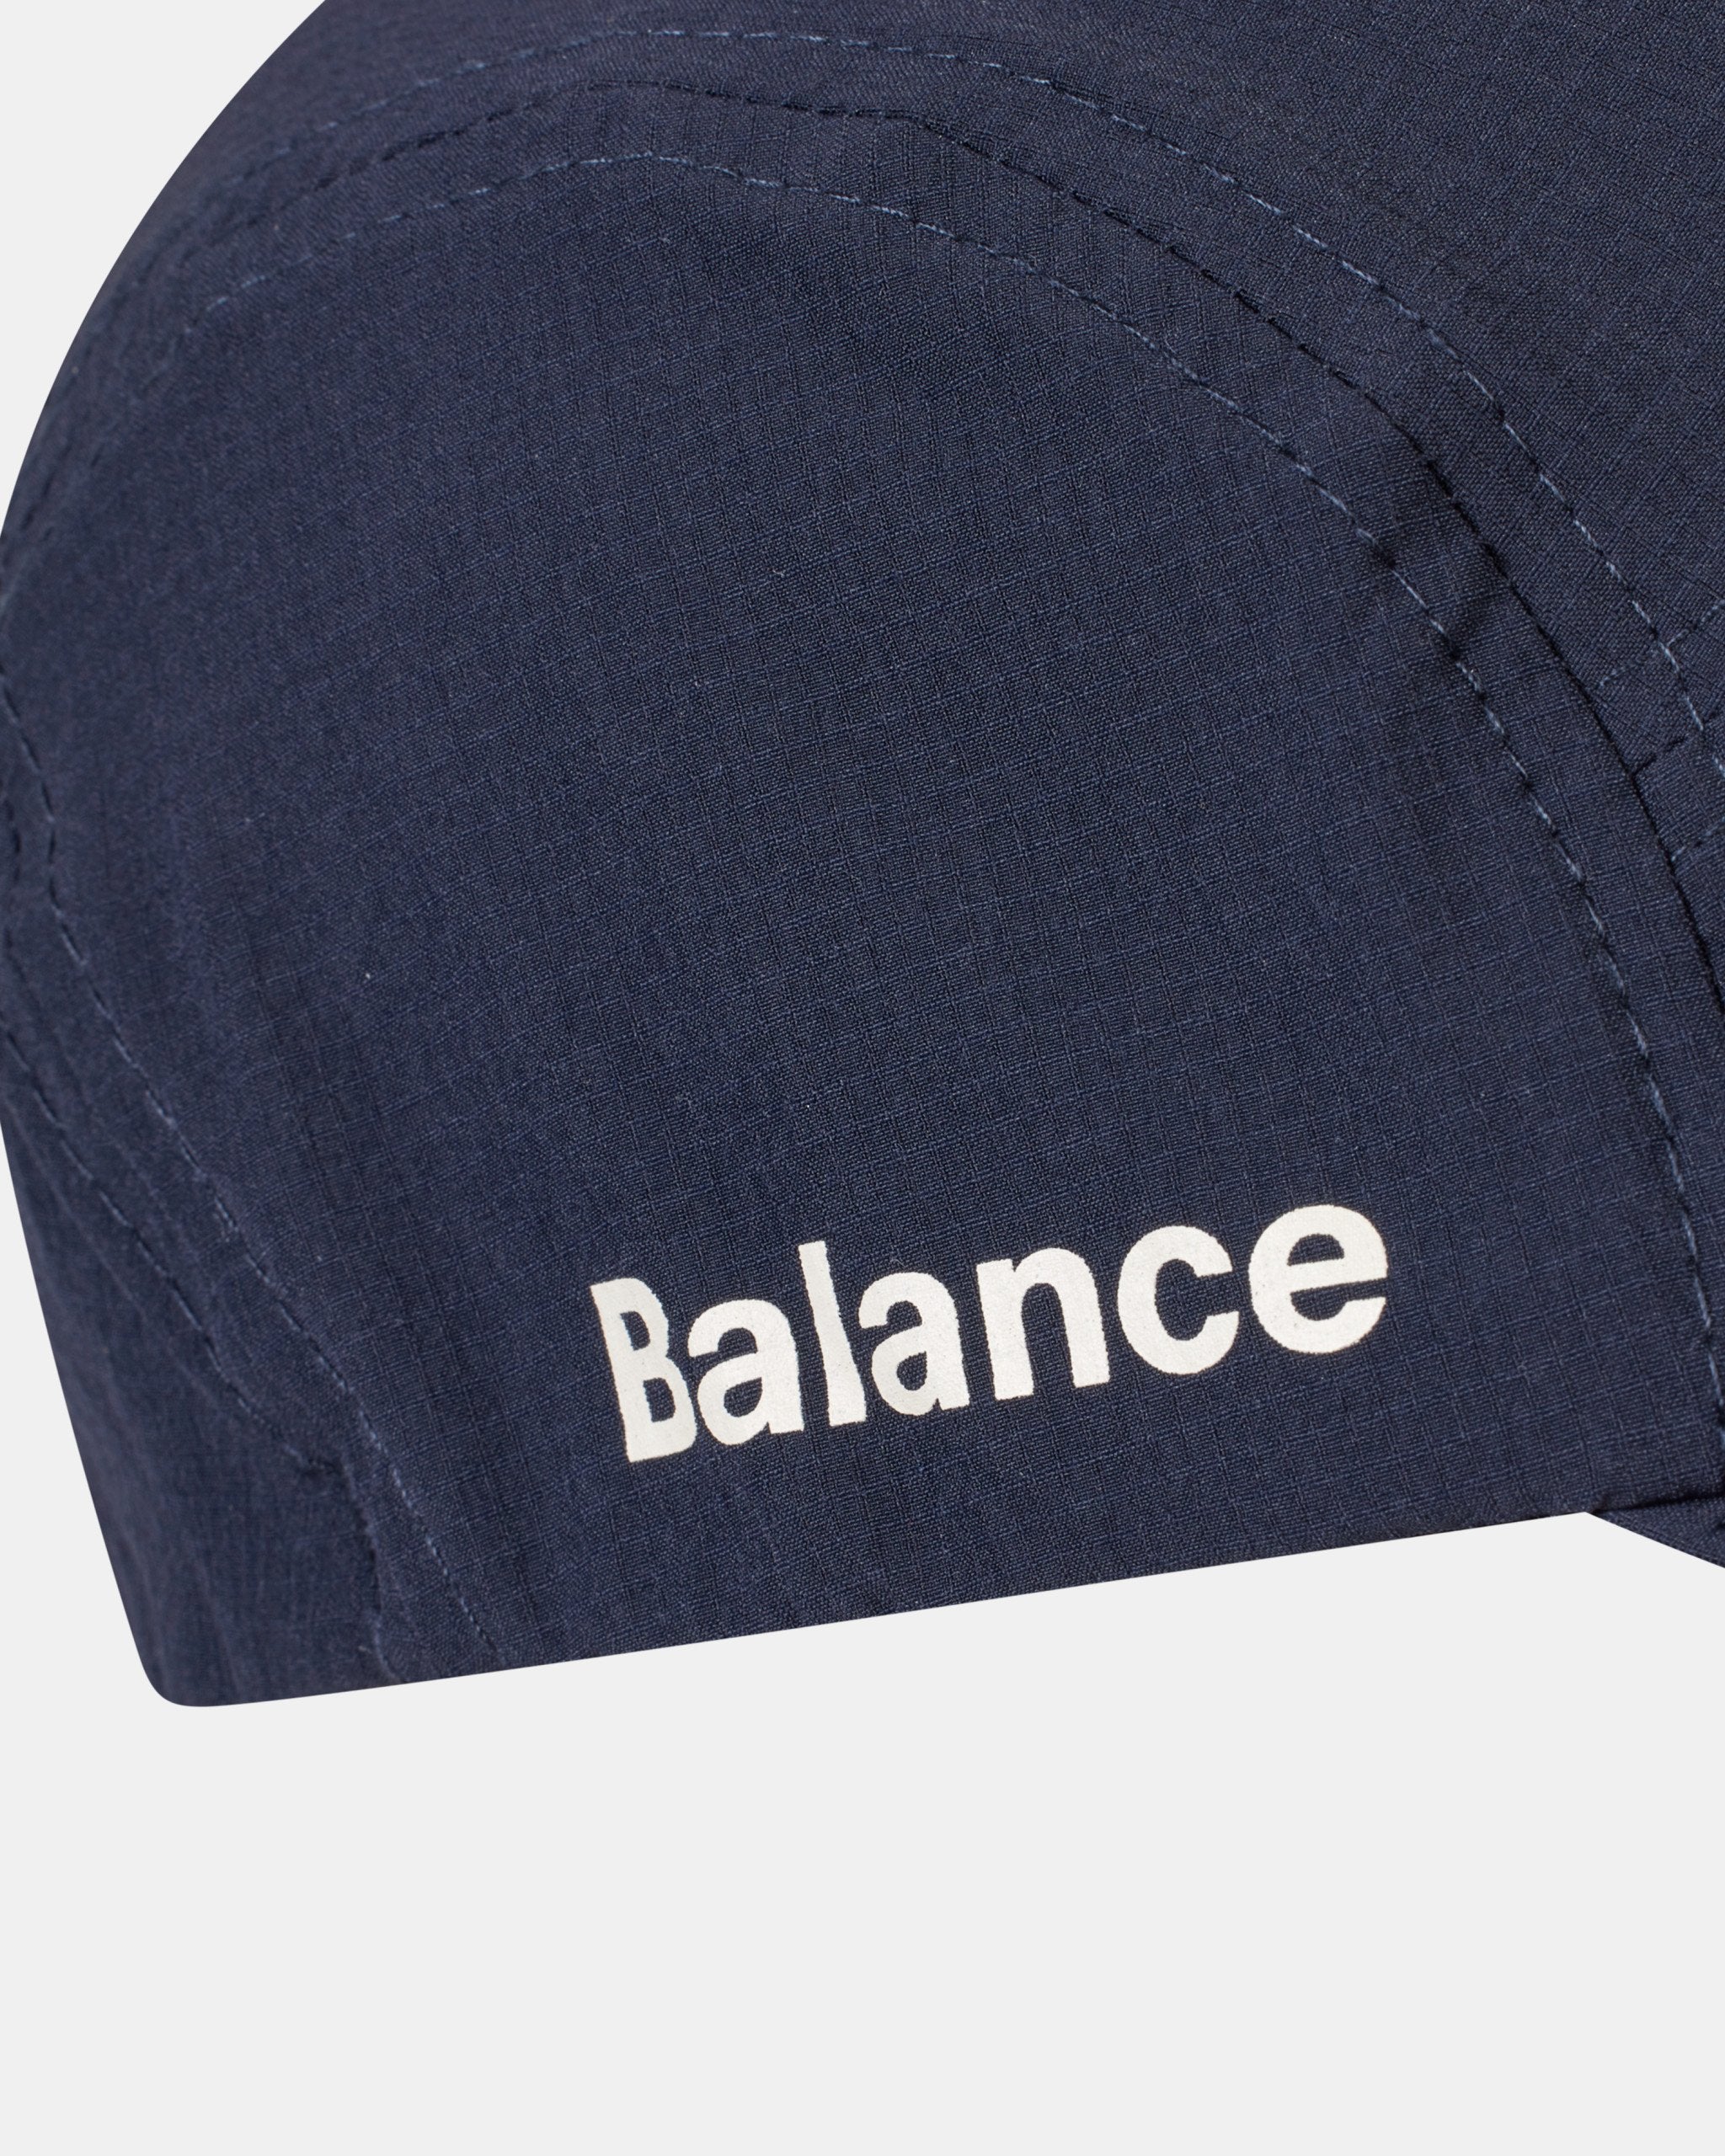 Balance Cap - Navy